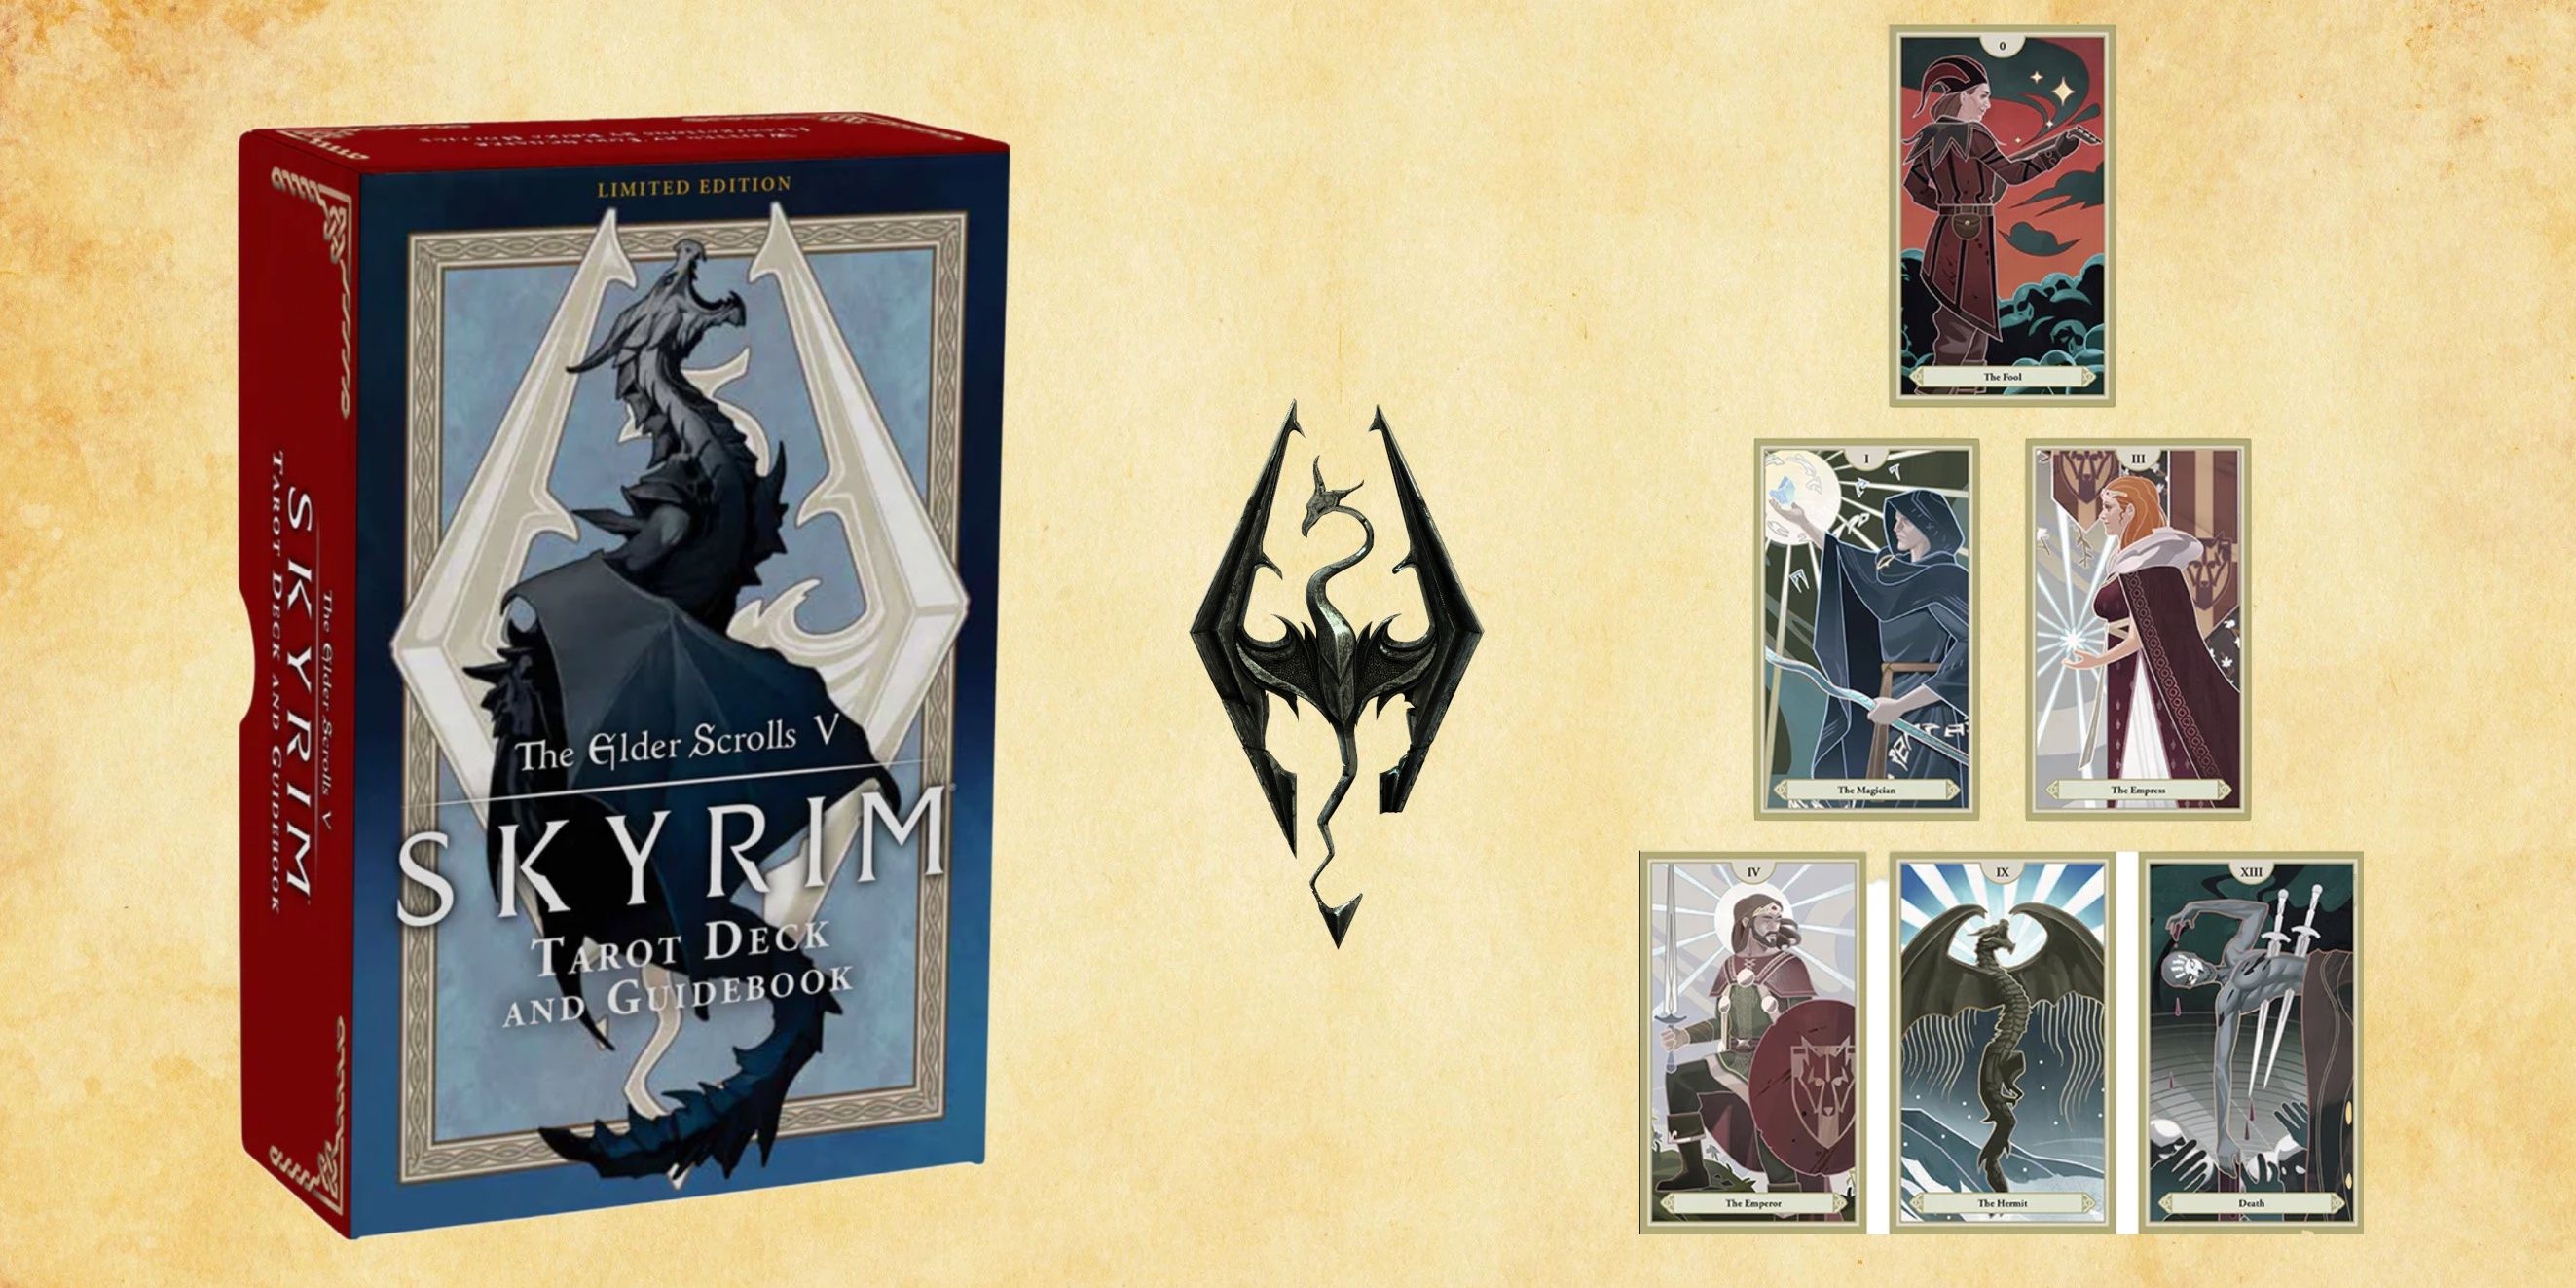 Elder Scrolls V: Skyrim Tarot Deck and Guidebook Limited Edition